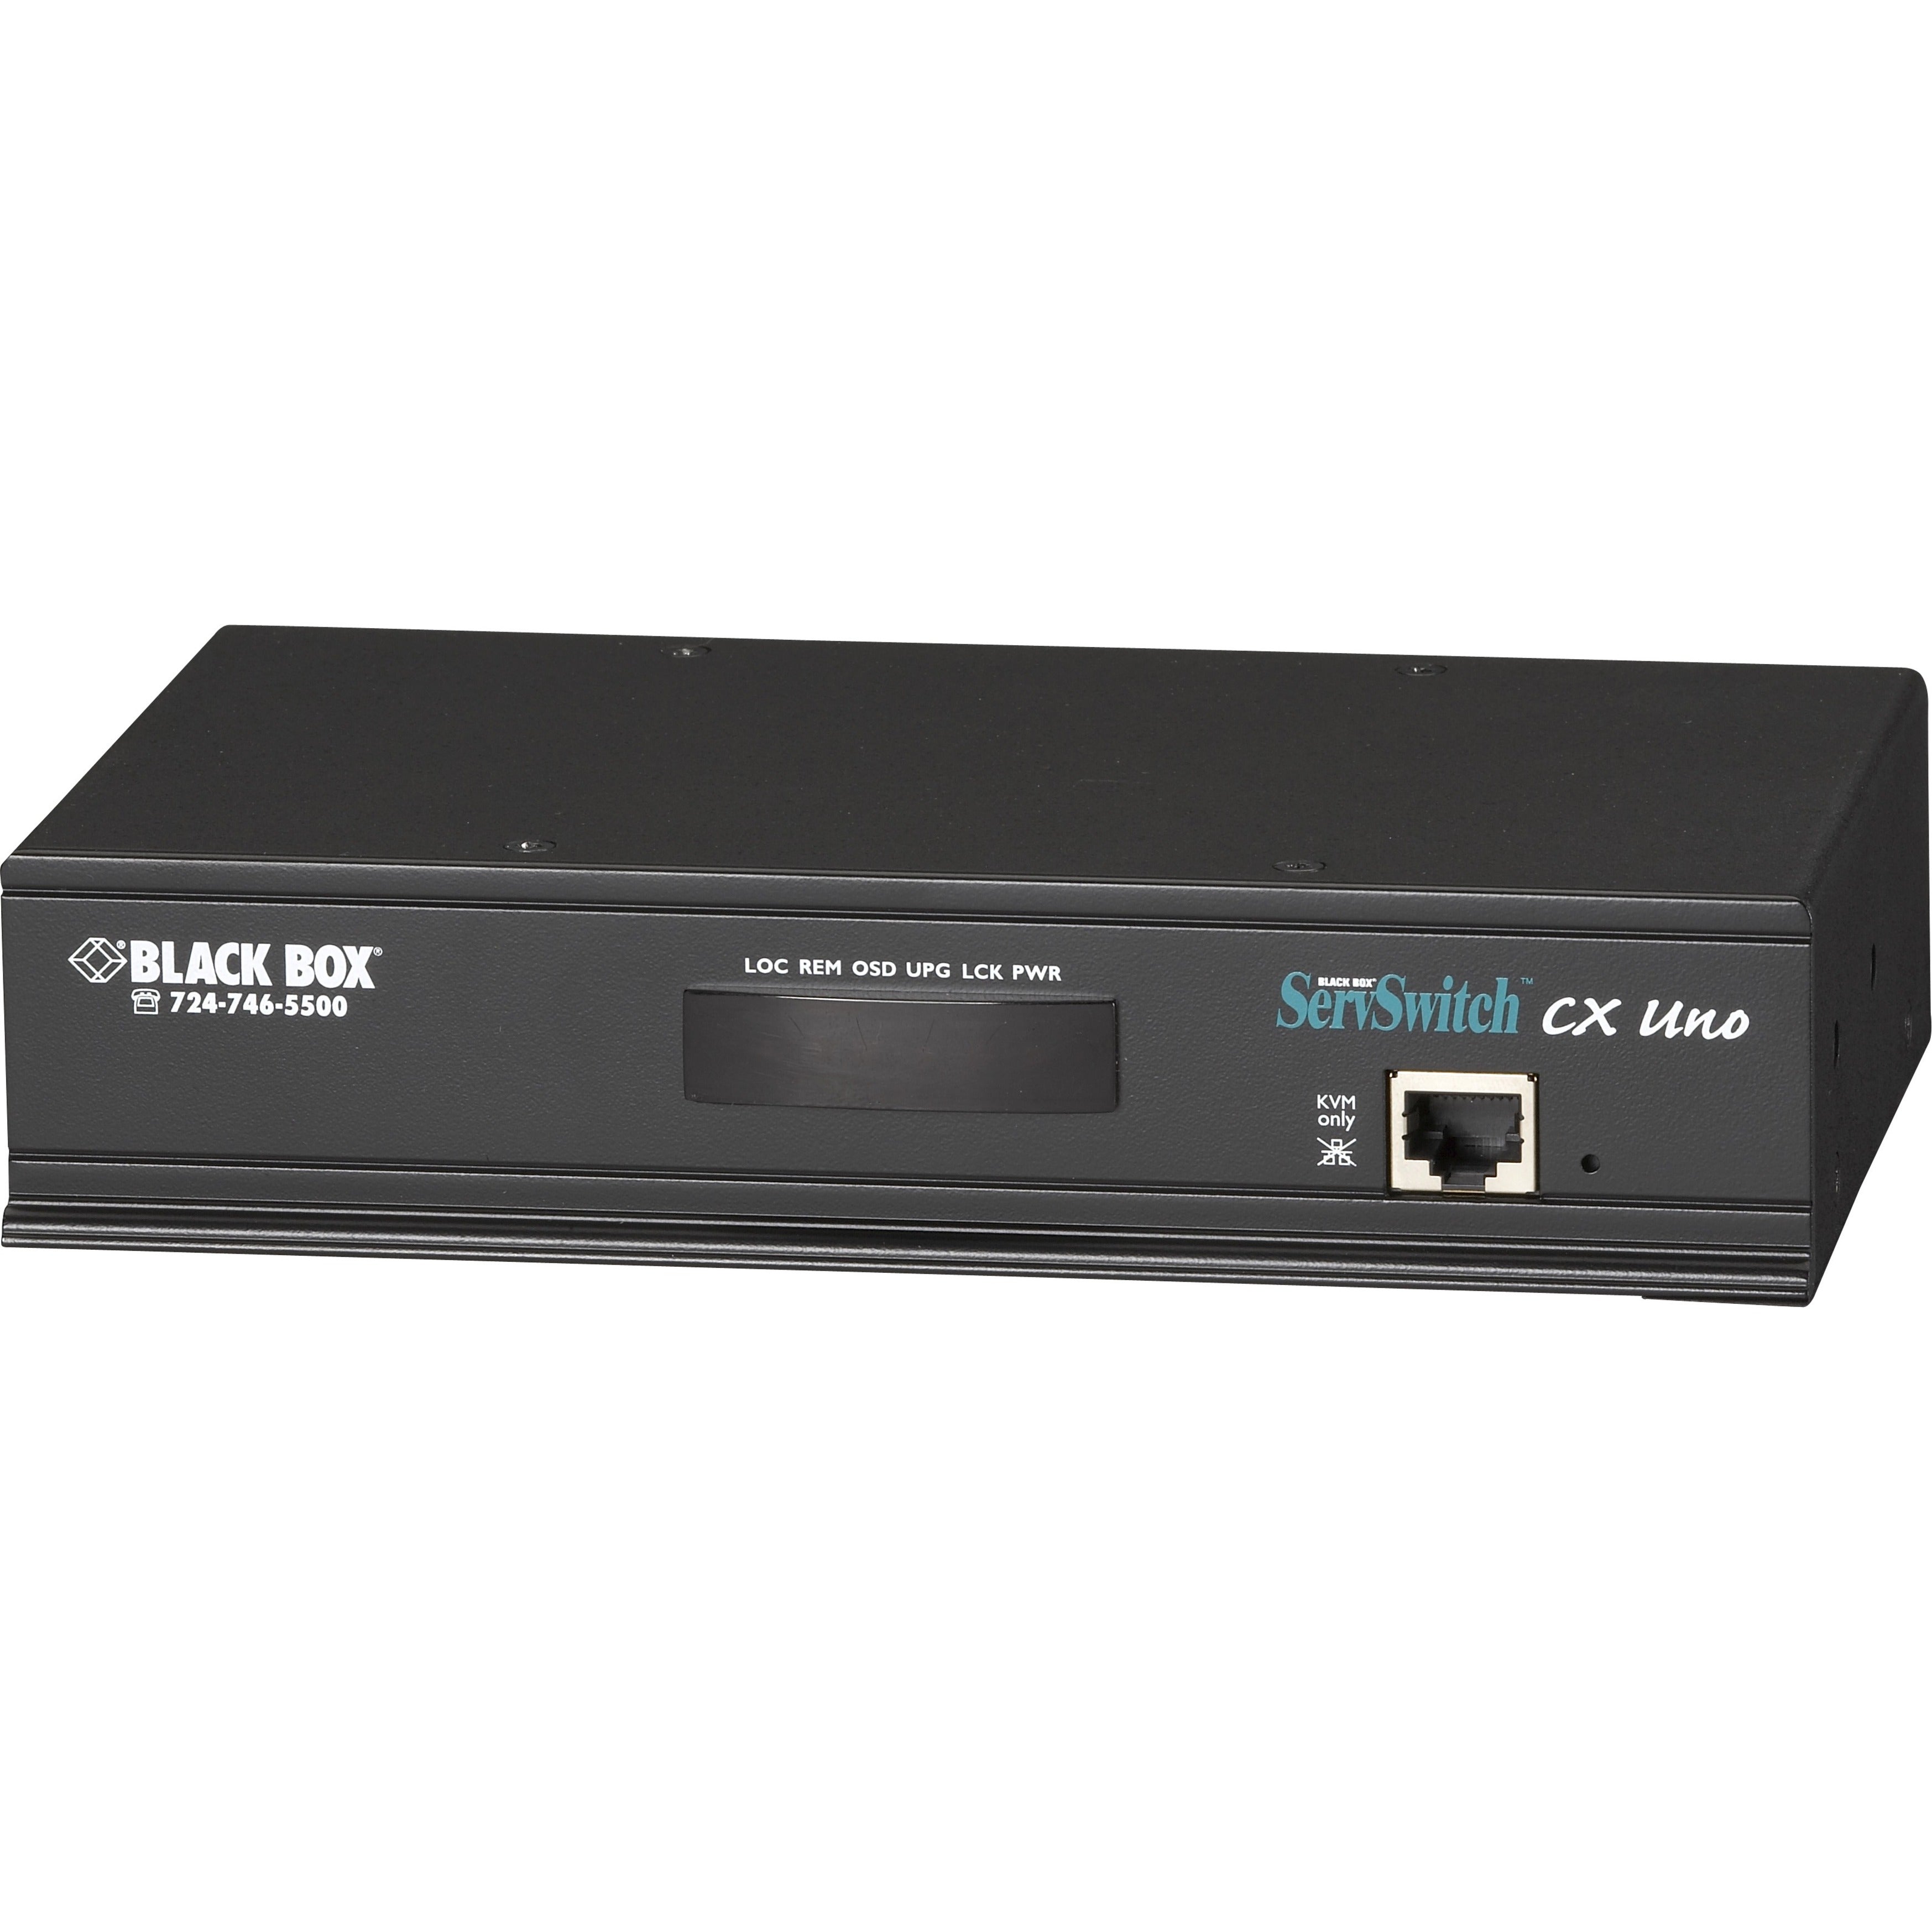 Black Box KV0161A ServSwitch CX Uno,16-Port KVM Switchbox